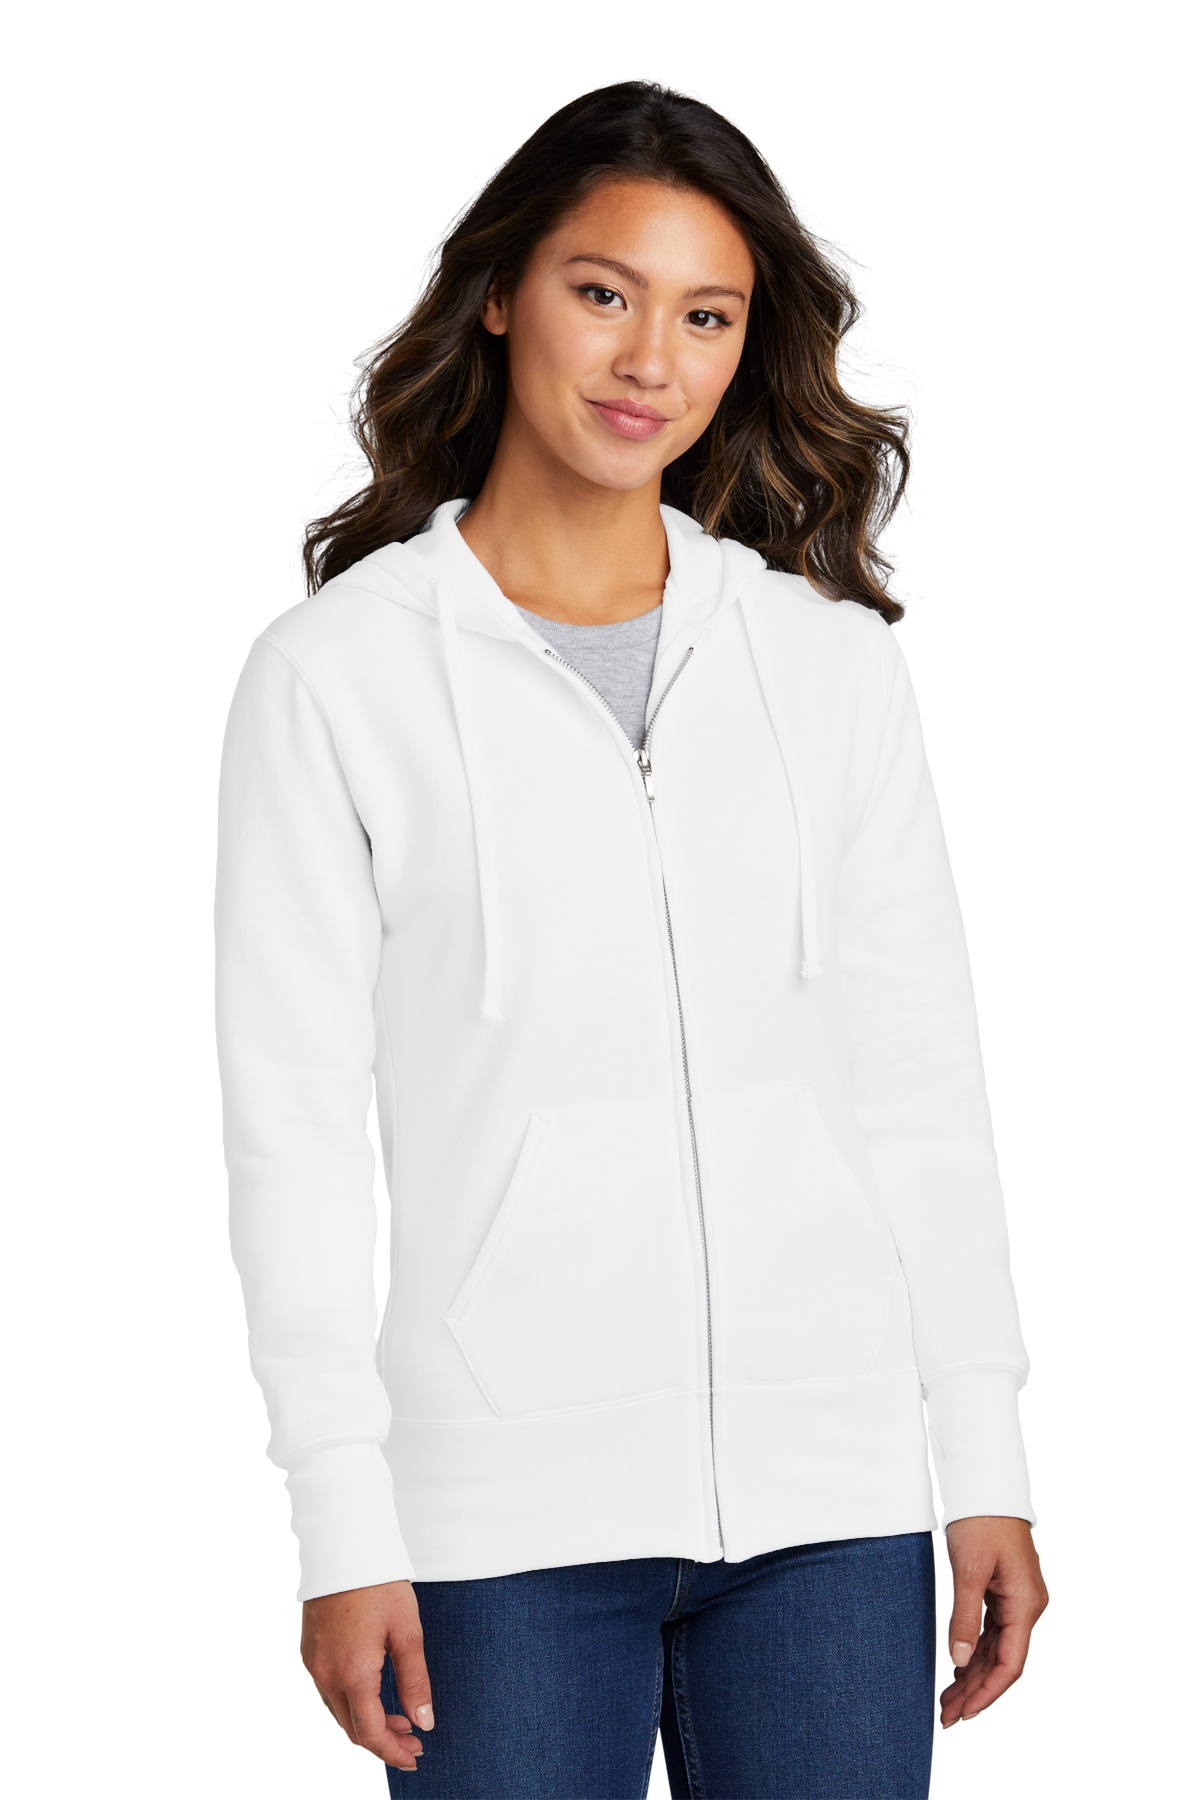 Port & Company Ladies Core Fleece Full-Zip Hooded Sweatshirt | Product ...